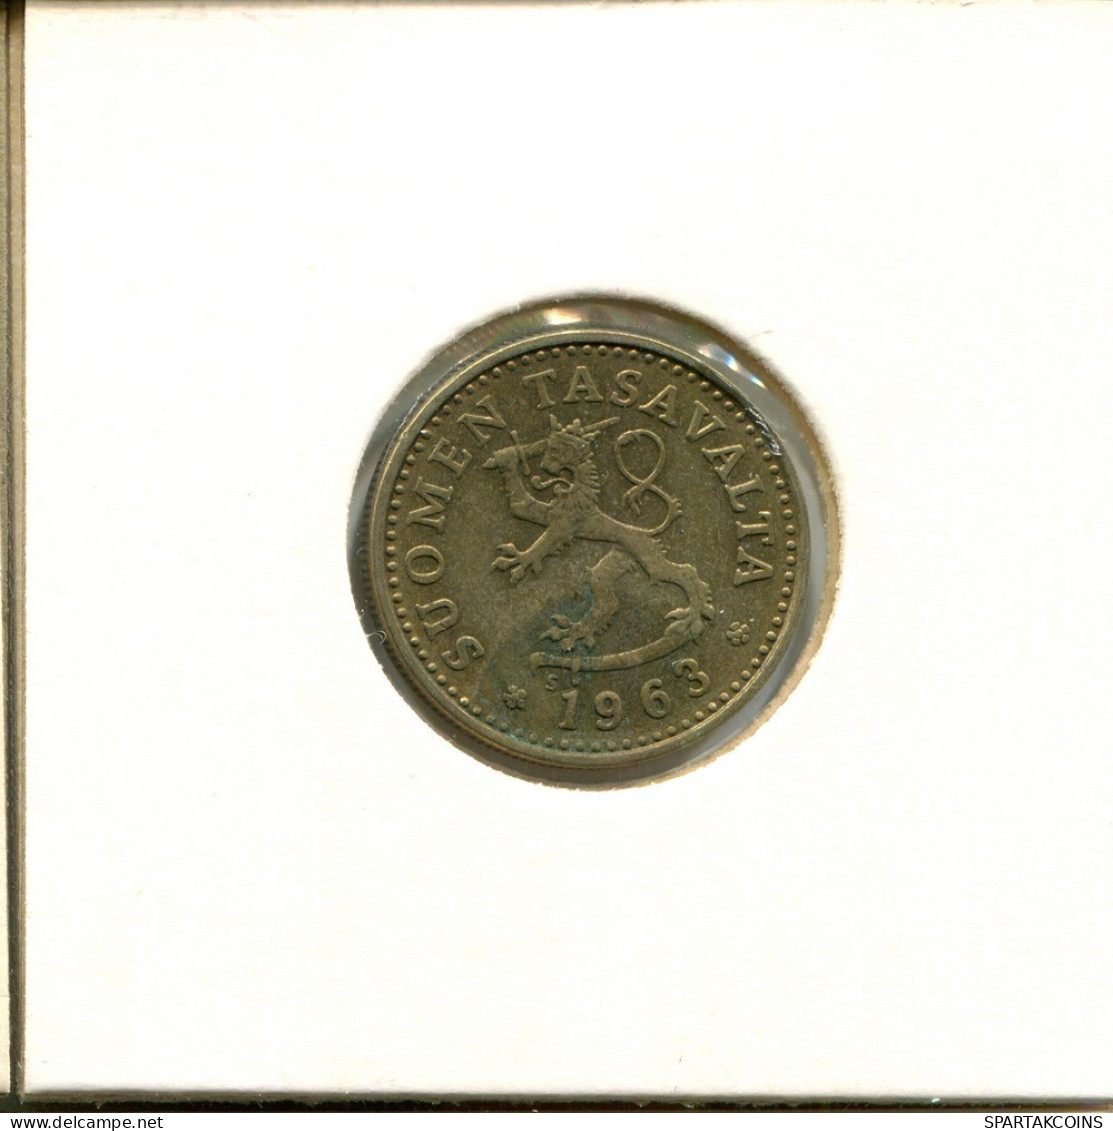 10 PENNYA 1963 FINLAND Coin #AS727.U.A - Finland